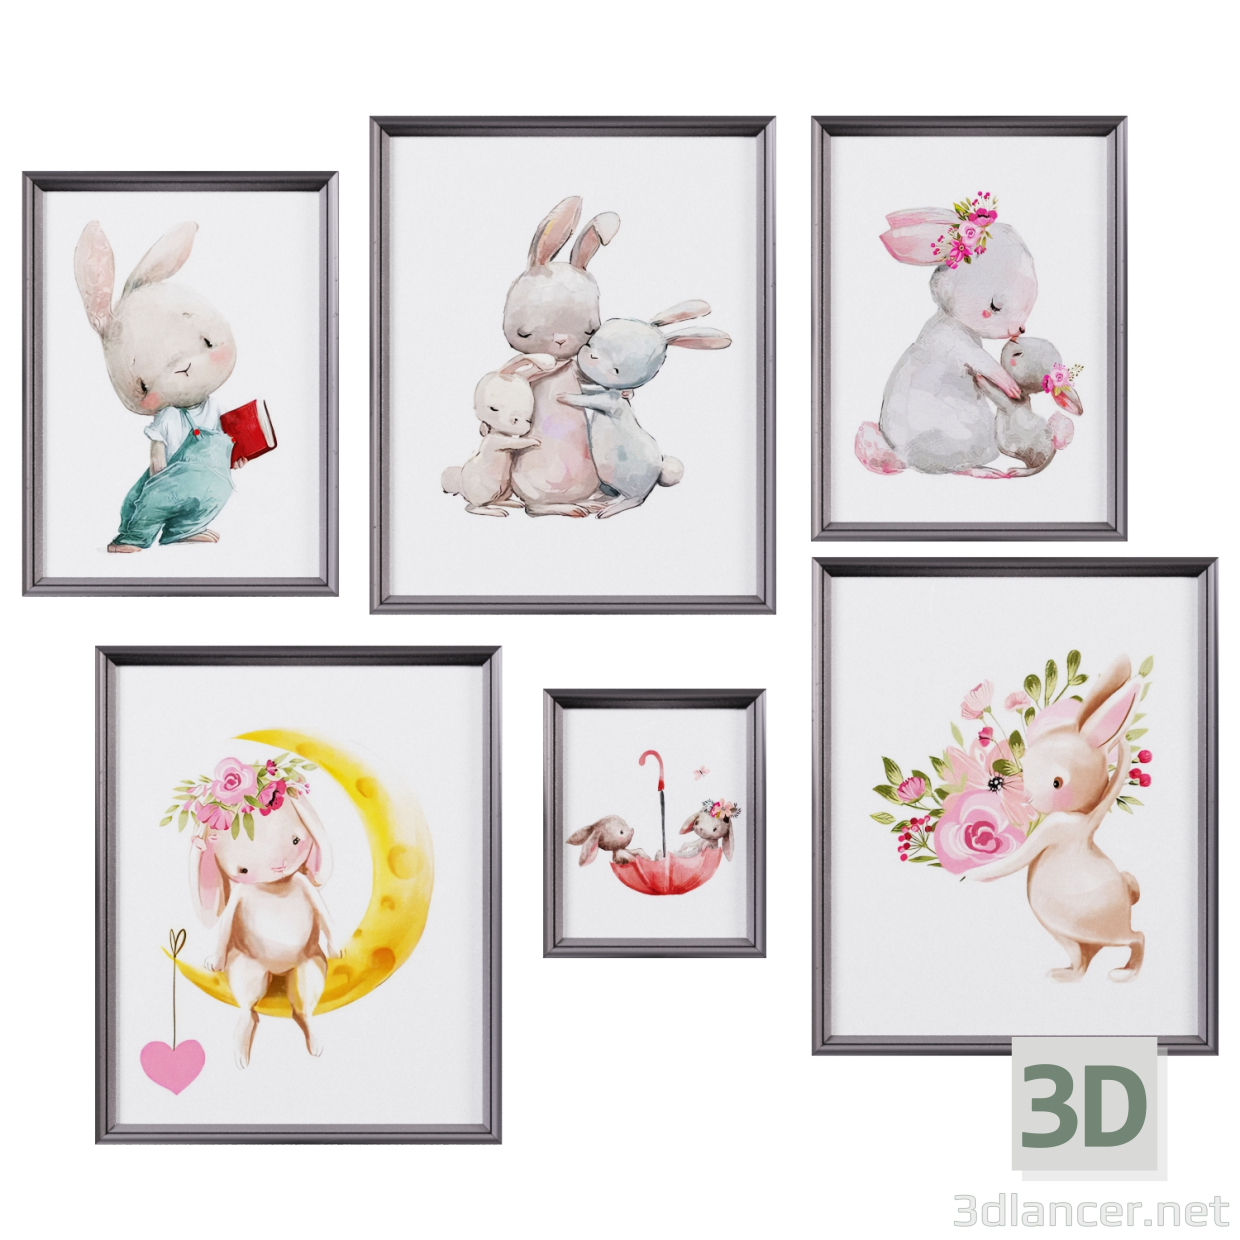 3d Posters for the children's room model buy - render